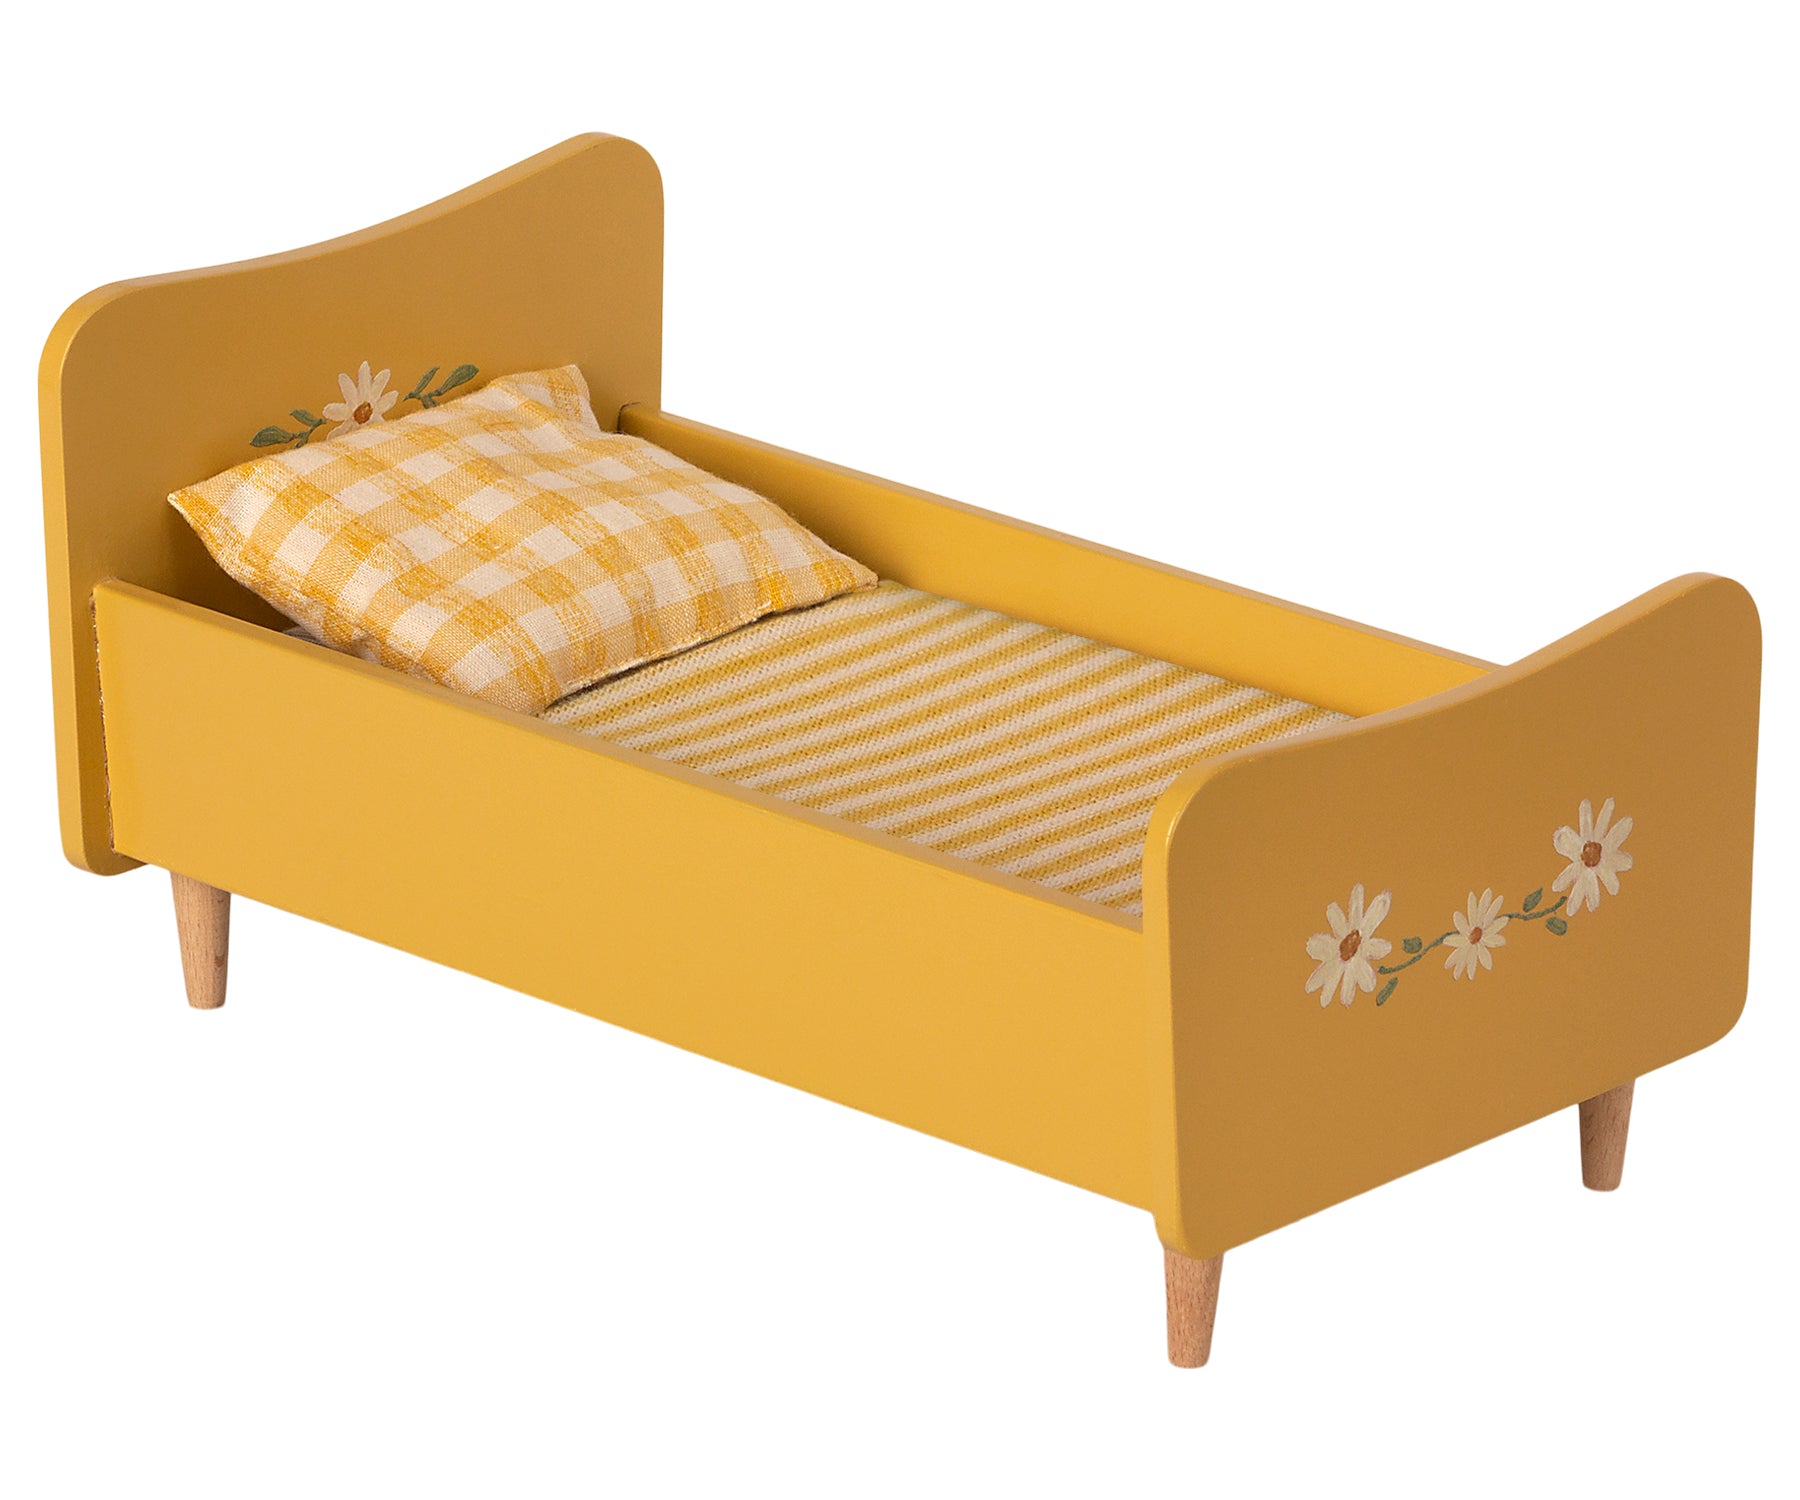 Maileg-Holz-Bett-Mini-gelb